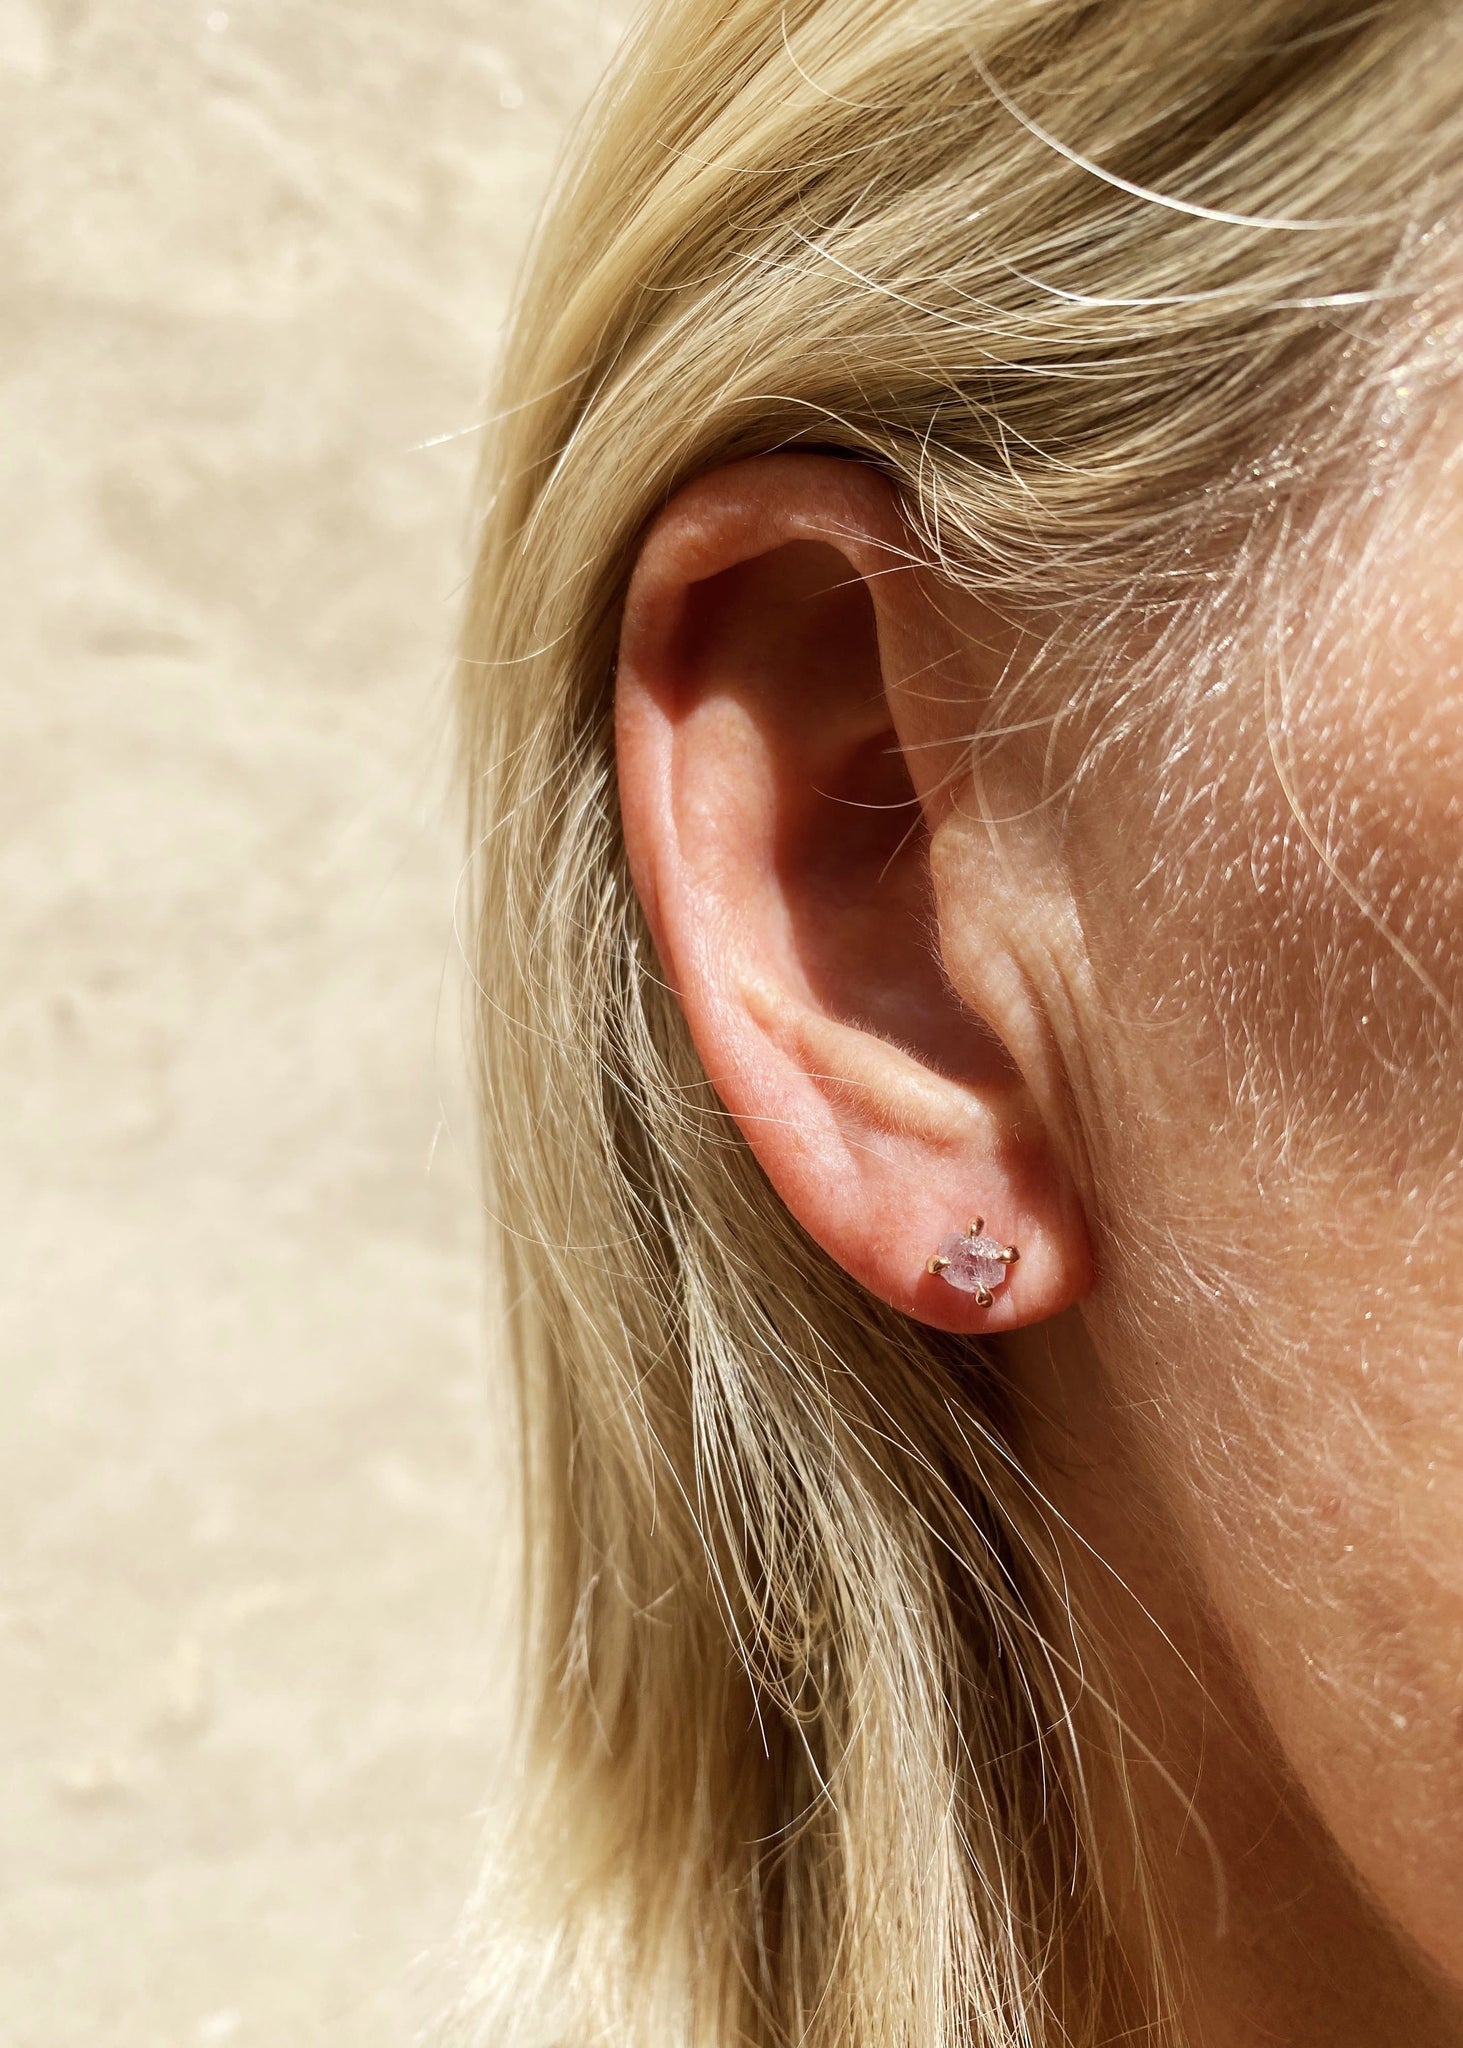 Pink gold earrings